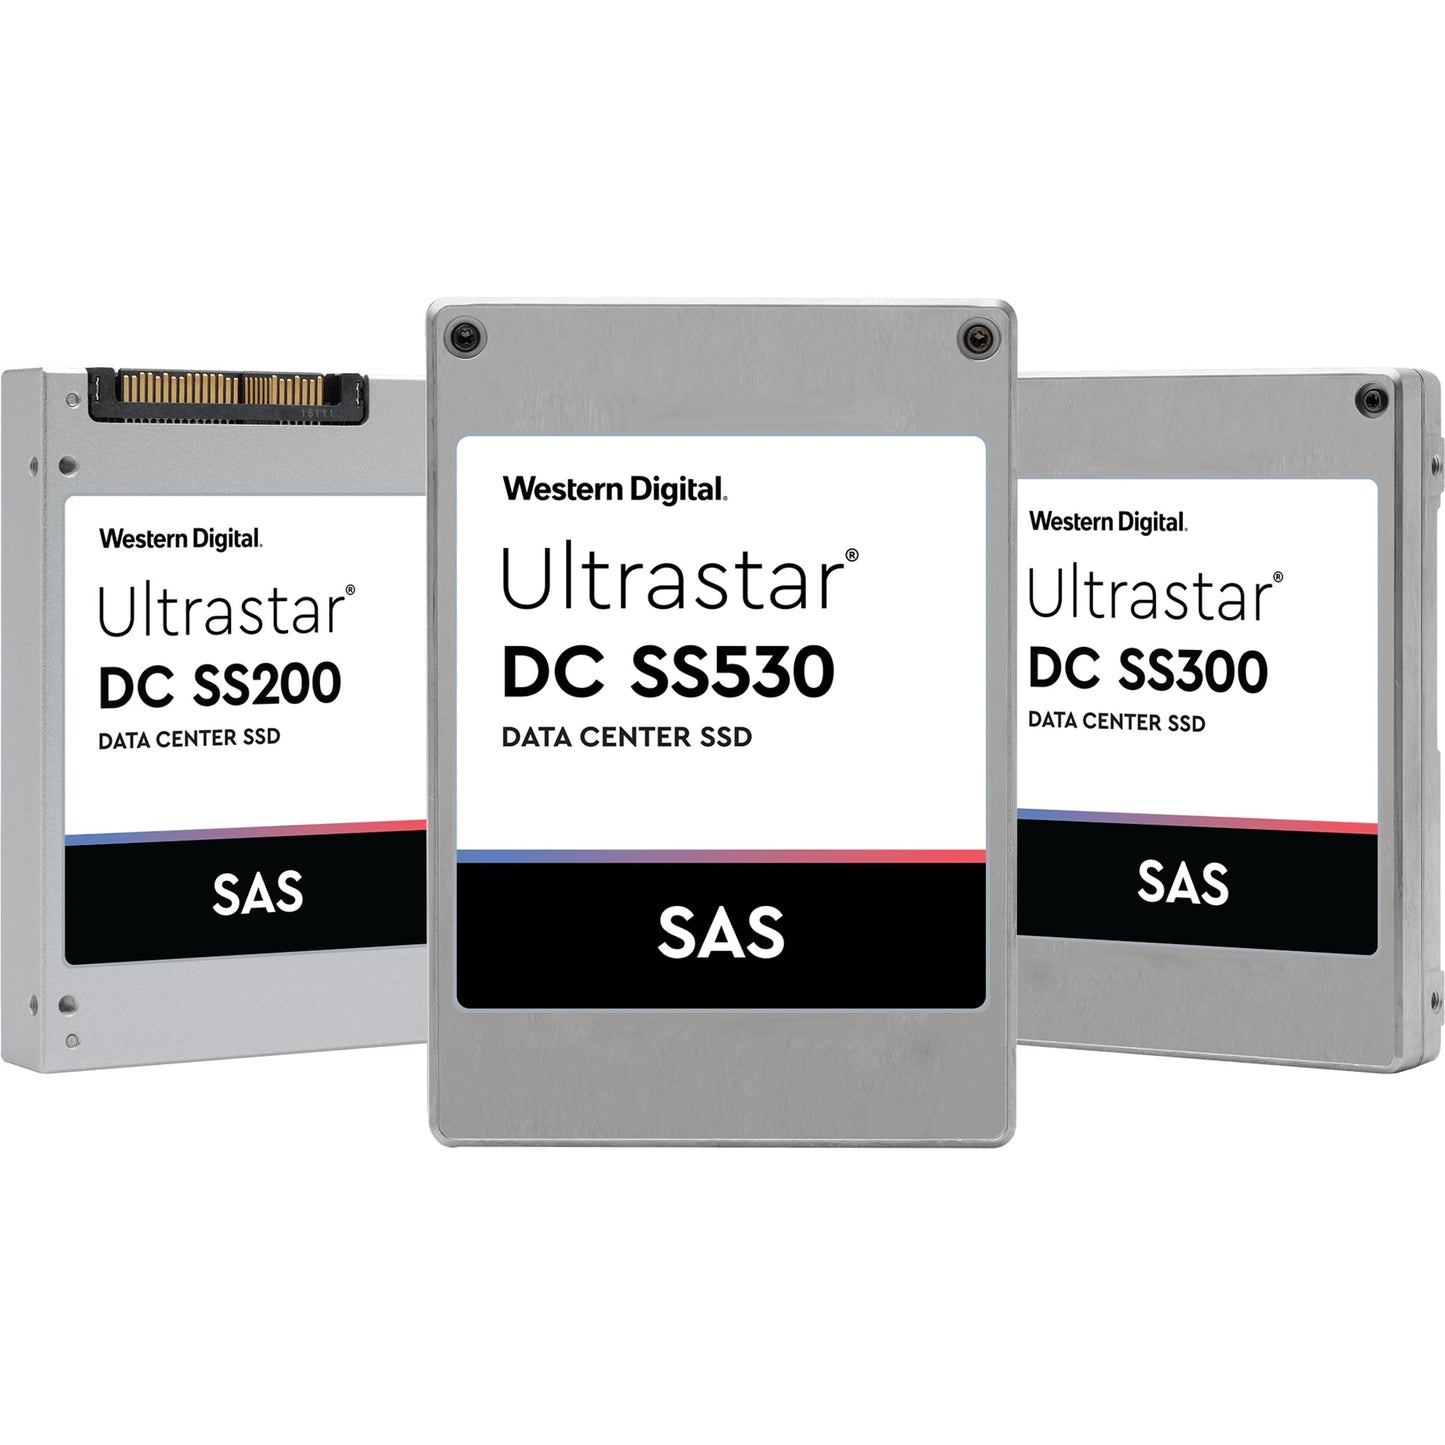 Western Digital Ultrastar DC SS530 WUSTR1596ASS201 960 GB Solid State Drive - 2.5" Internal - SAS (12Gb/s SAS)